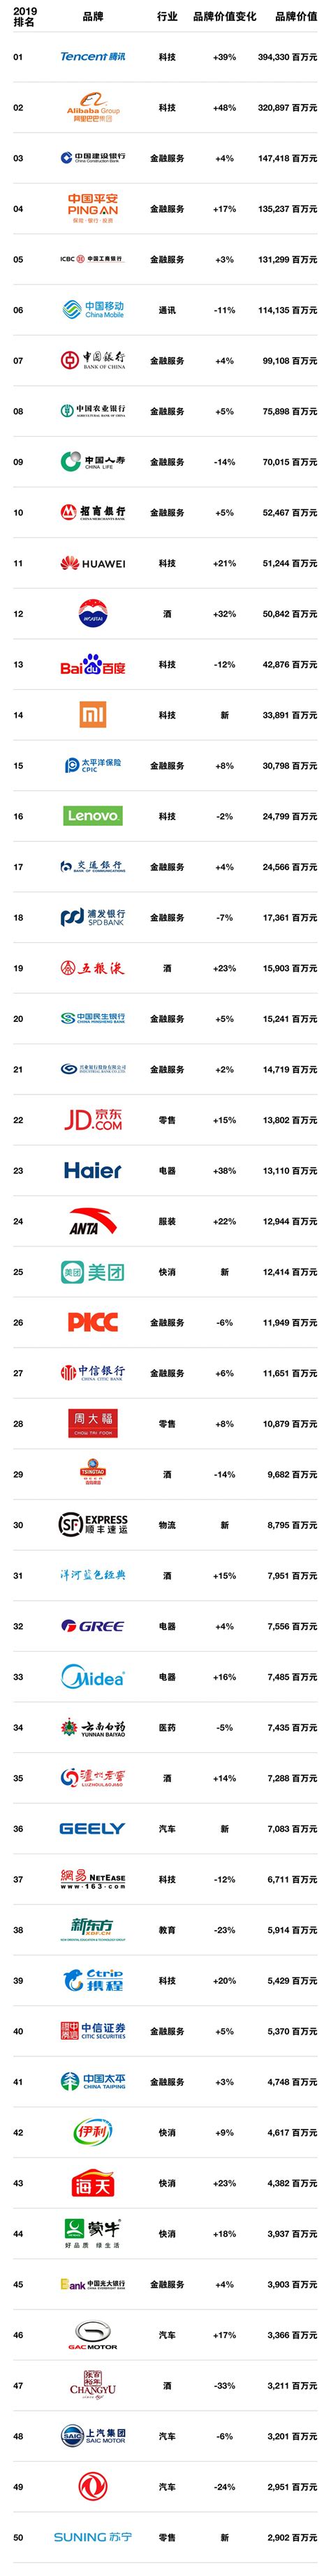 Interbrand发布2019年中国最佳品牌50强排行榜 - 原创观点 - 岂一非广告官网